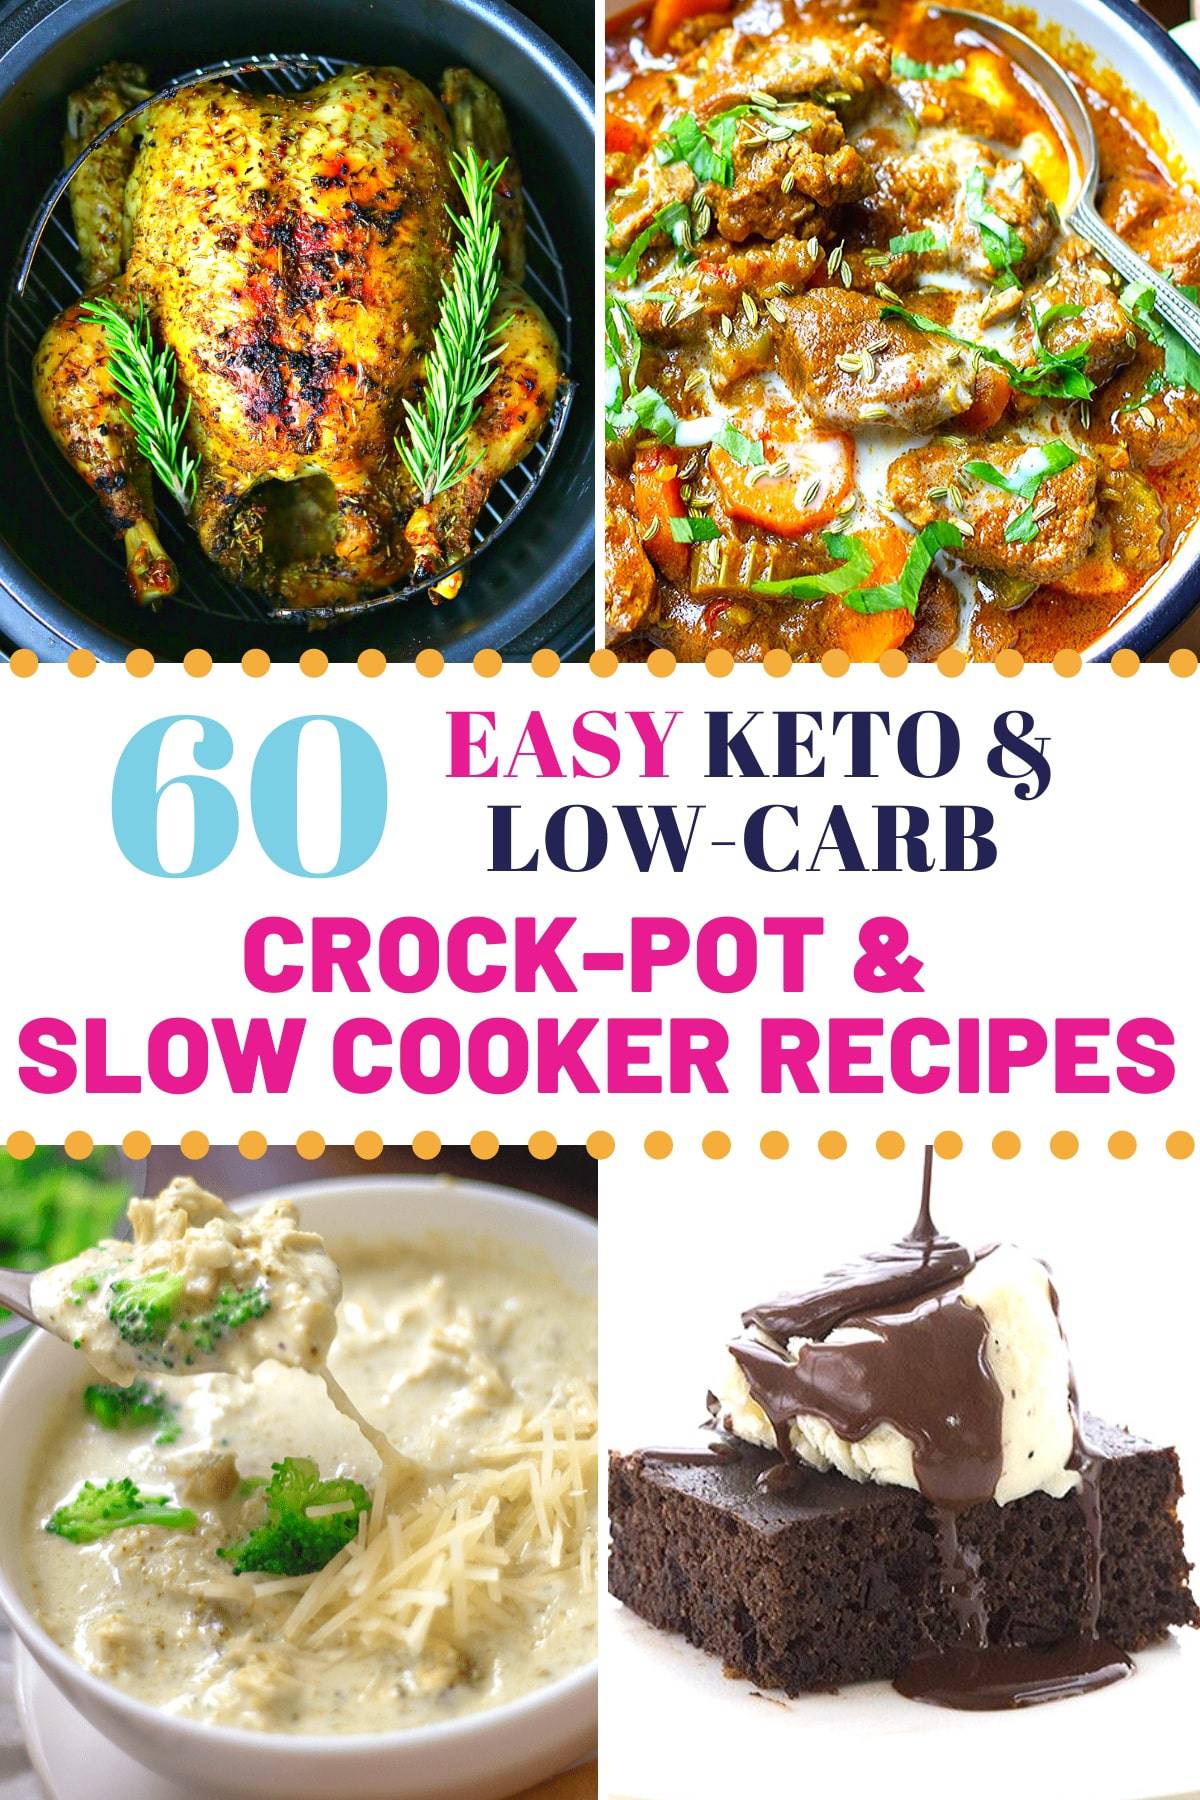 Buy Keto Slow Cooker Verified Voucher Code Printable Code March 2020